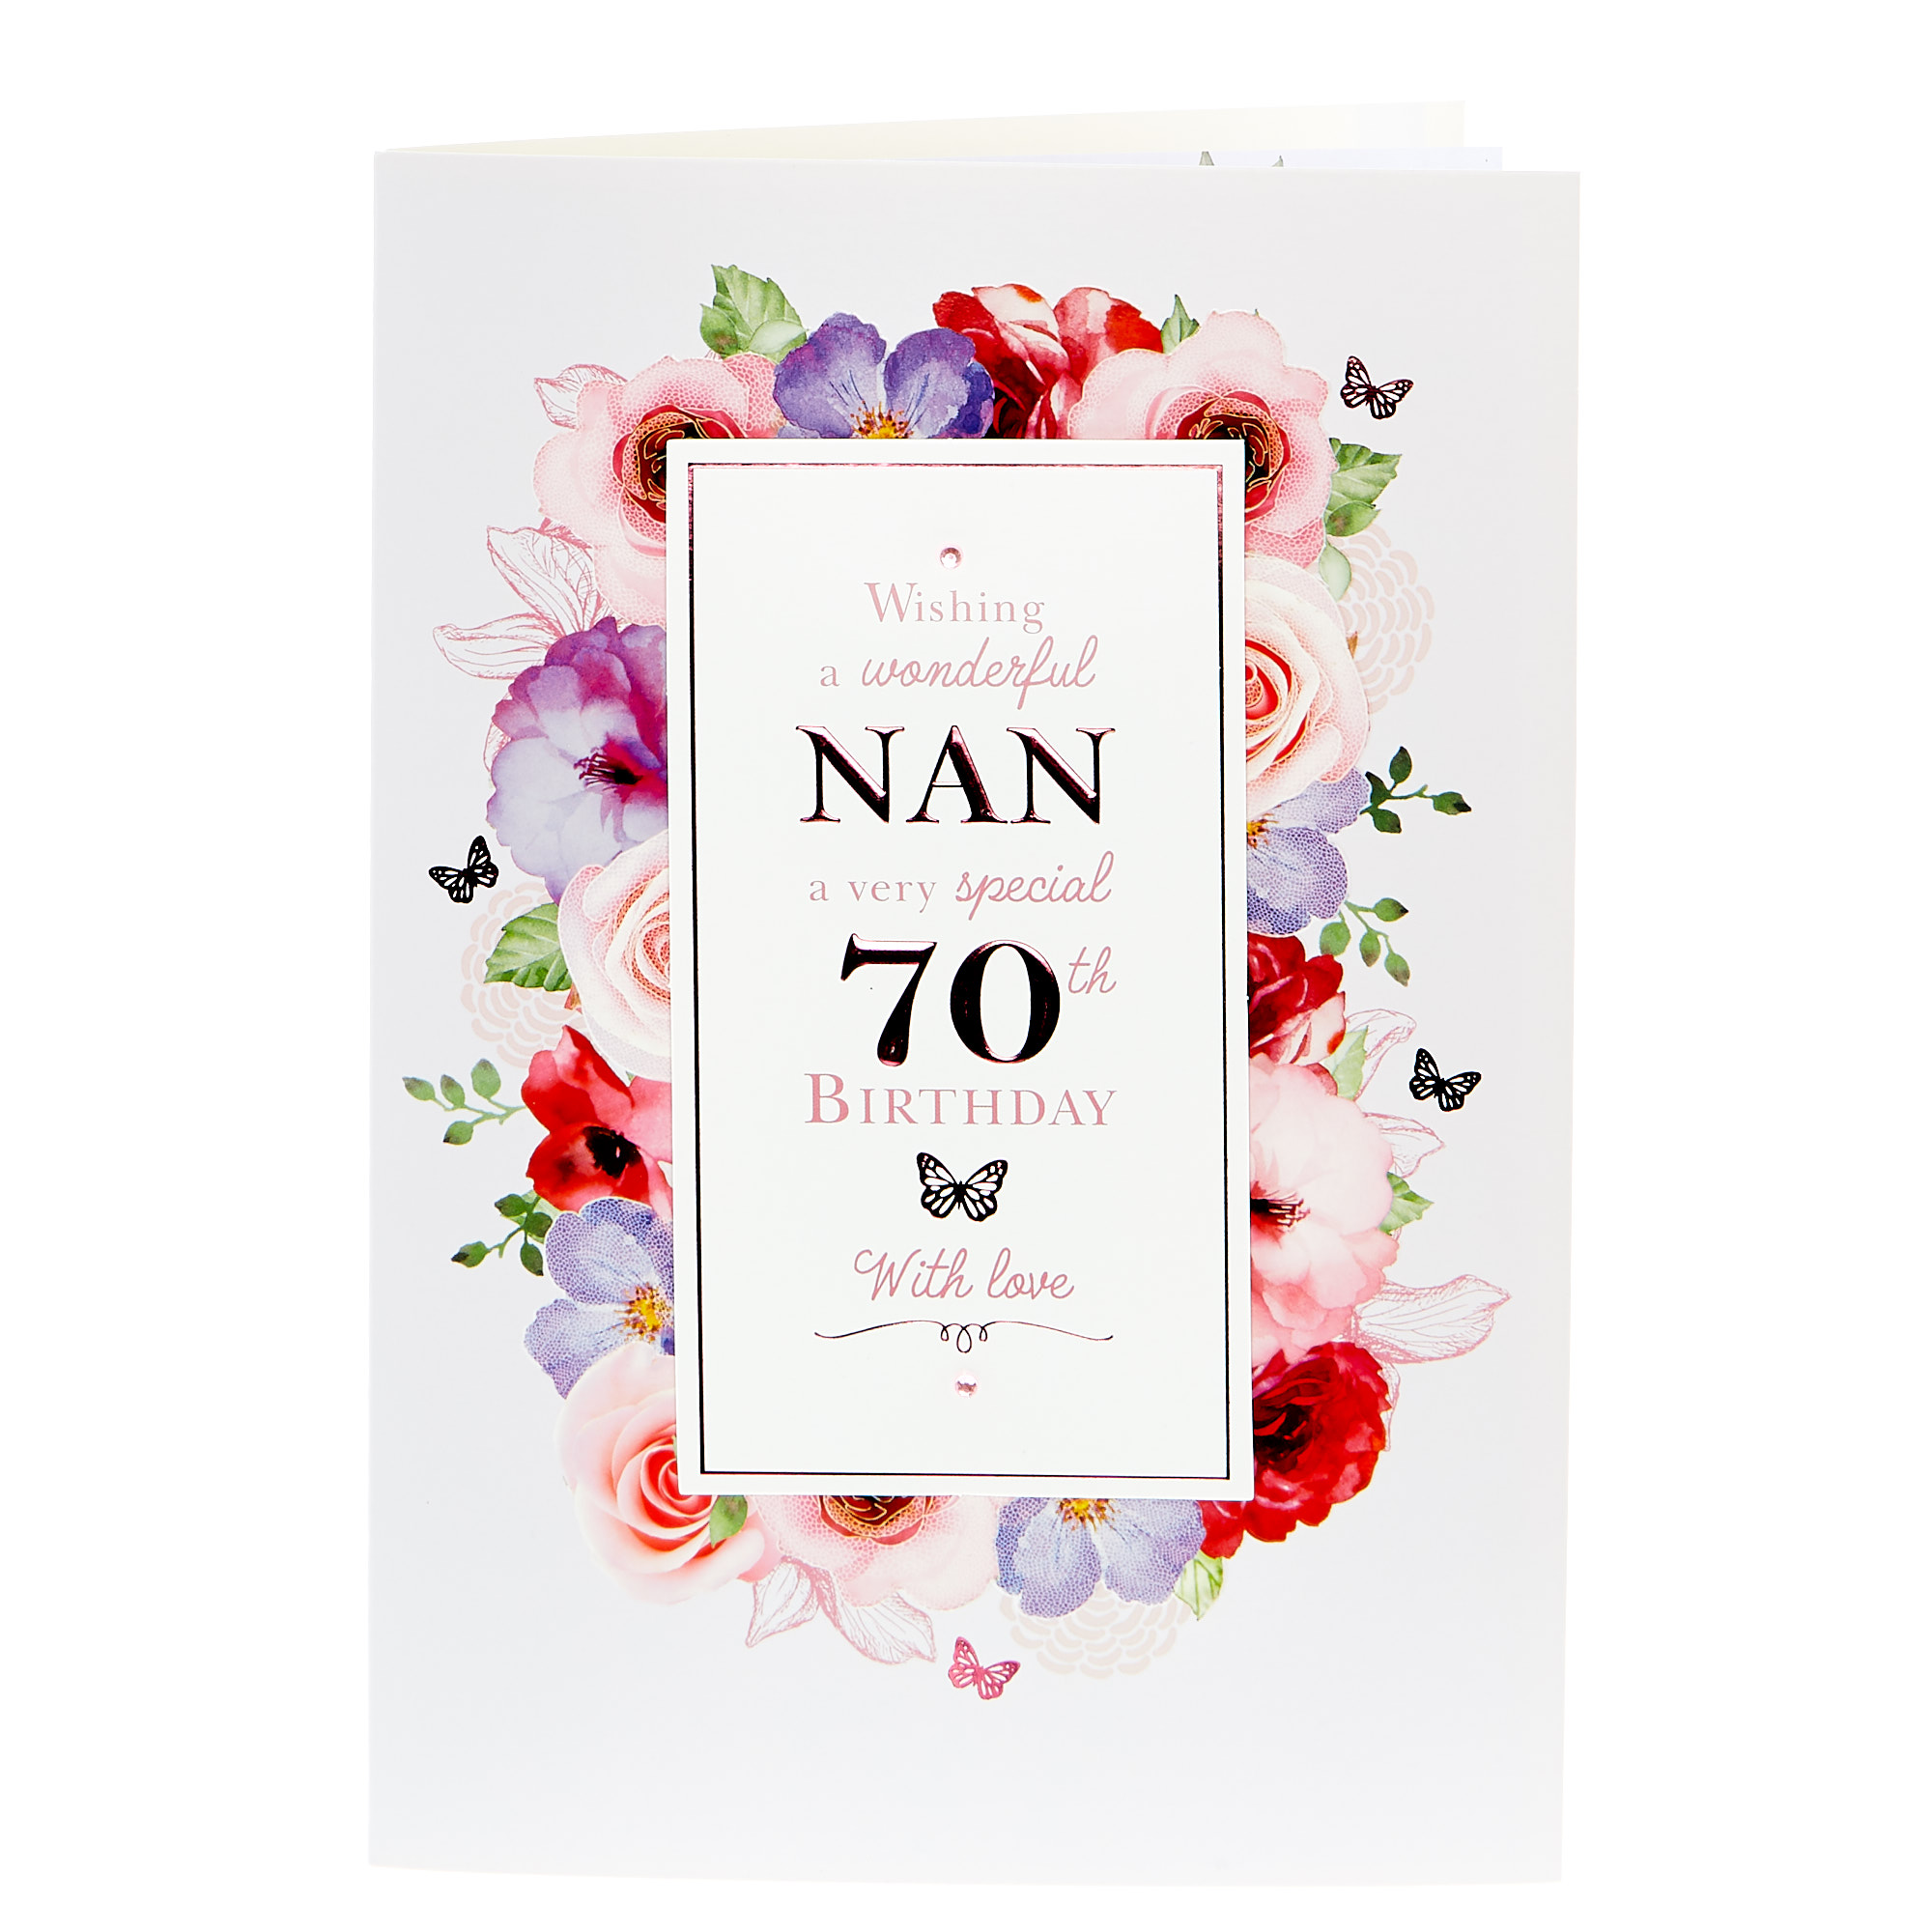 70th Birthday Card - Wonderful Nan With Love